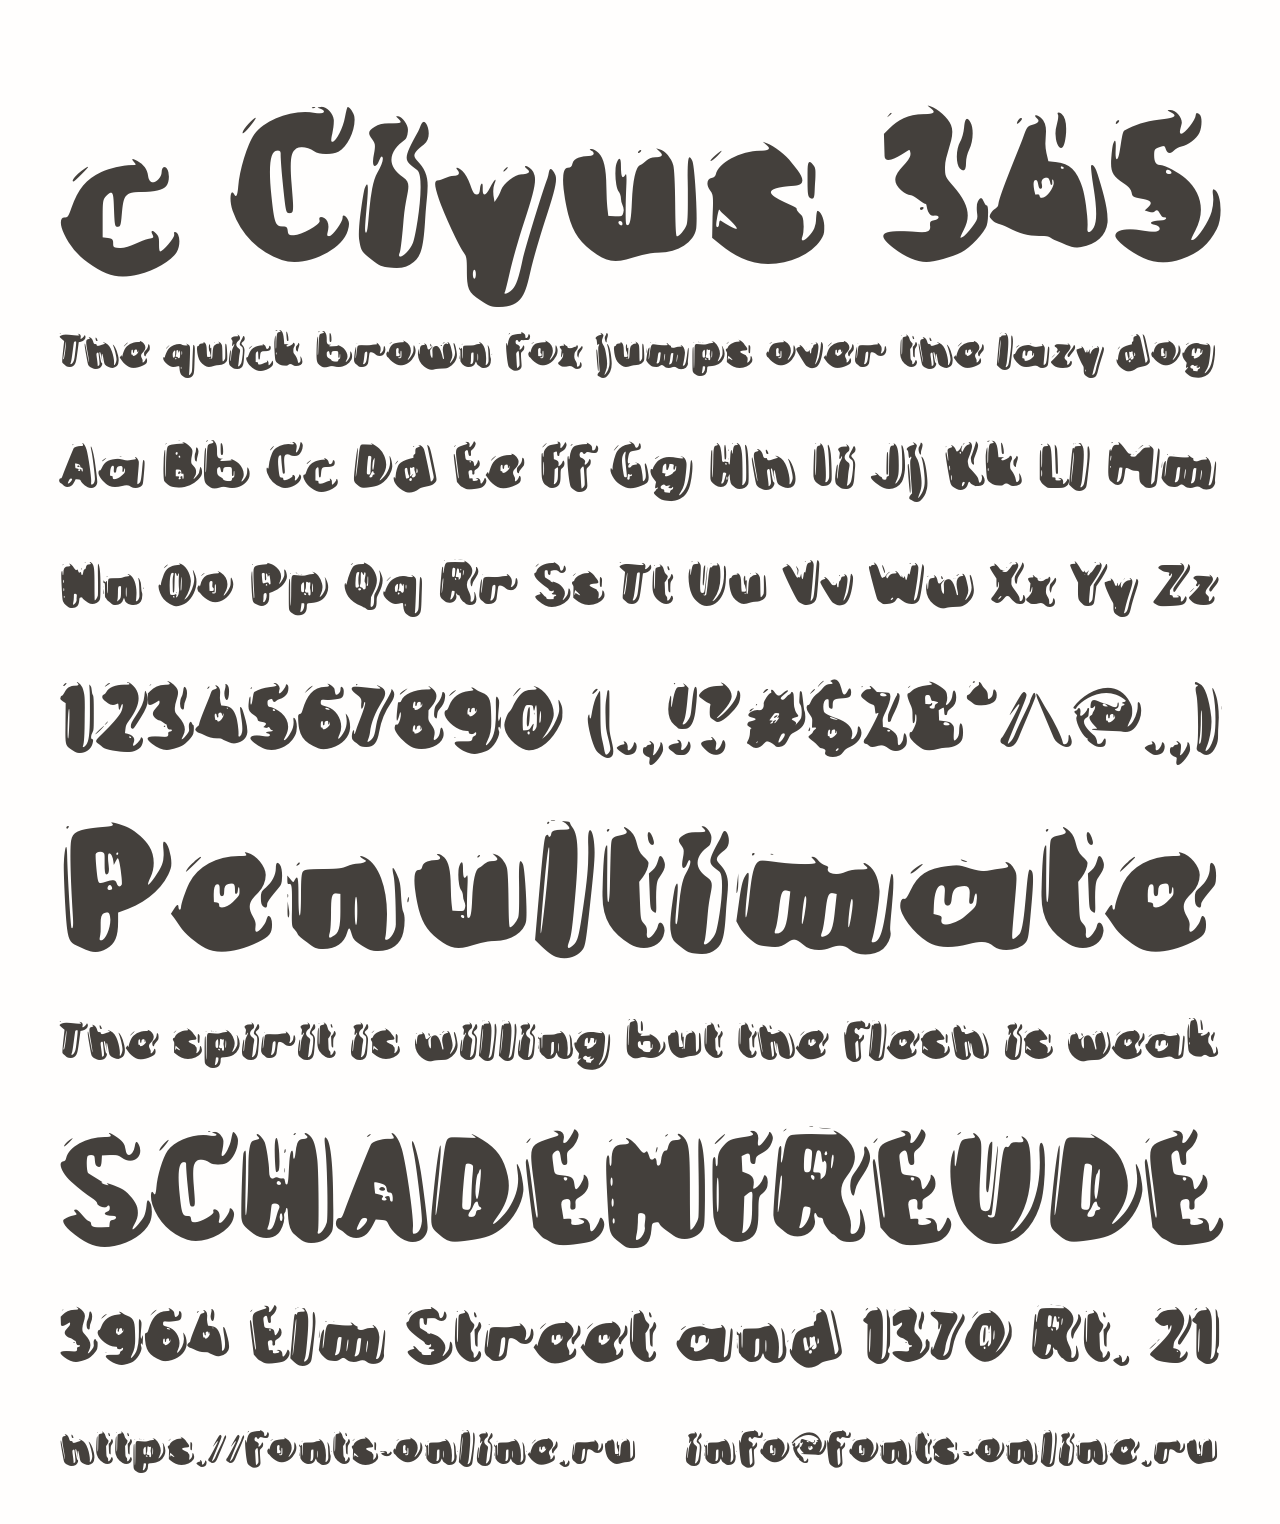 Шрифт c Ciyus 345